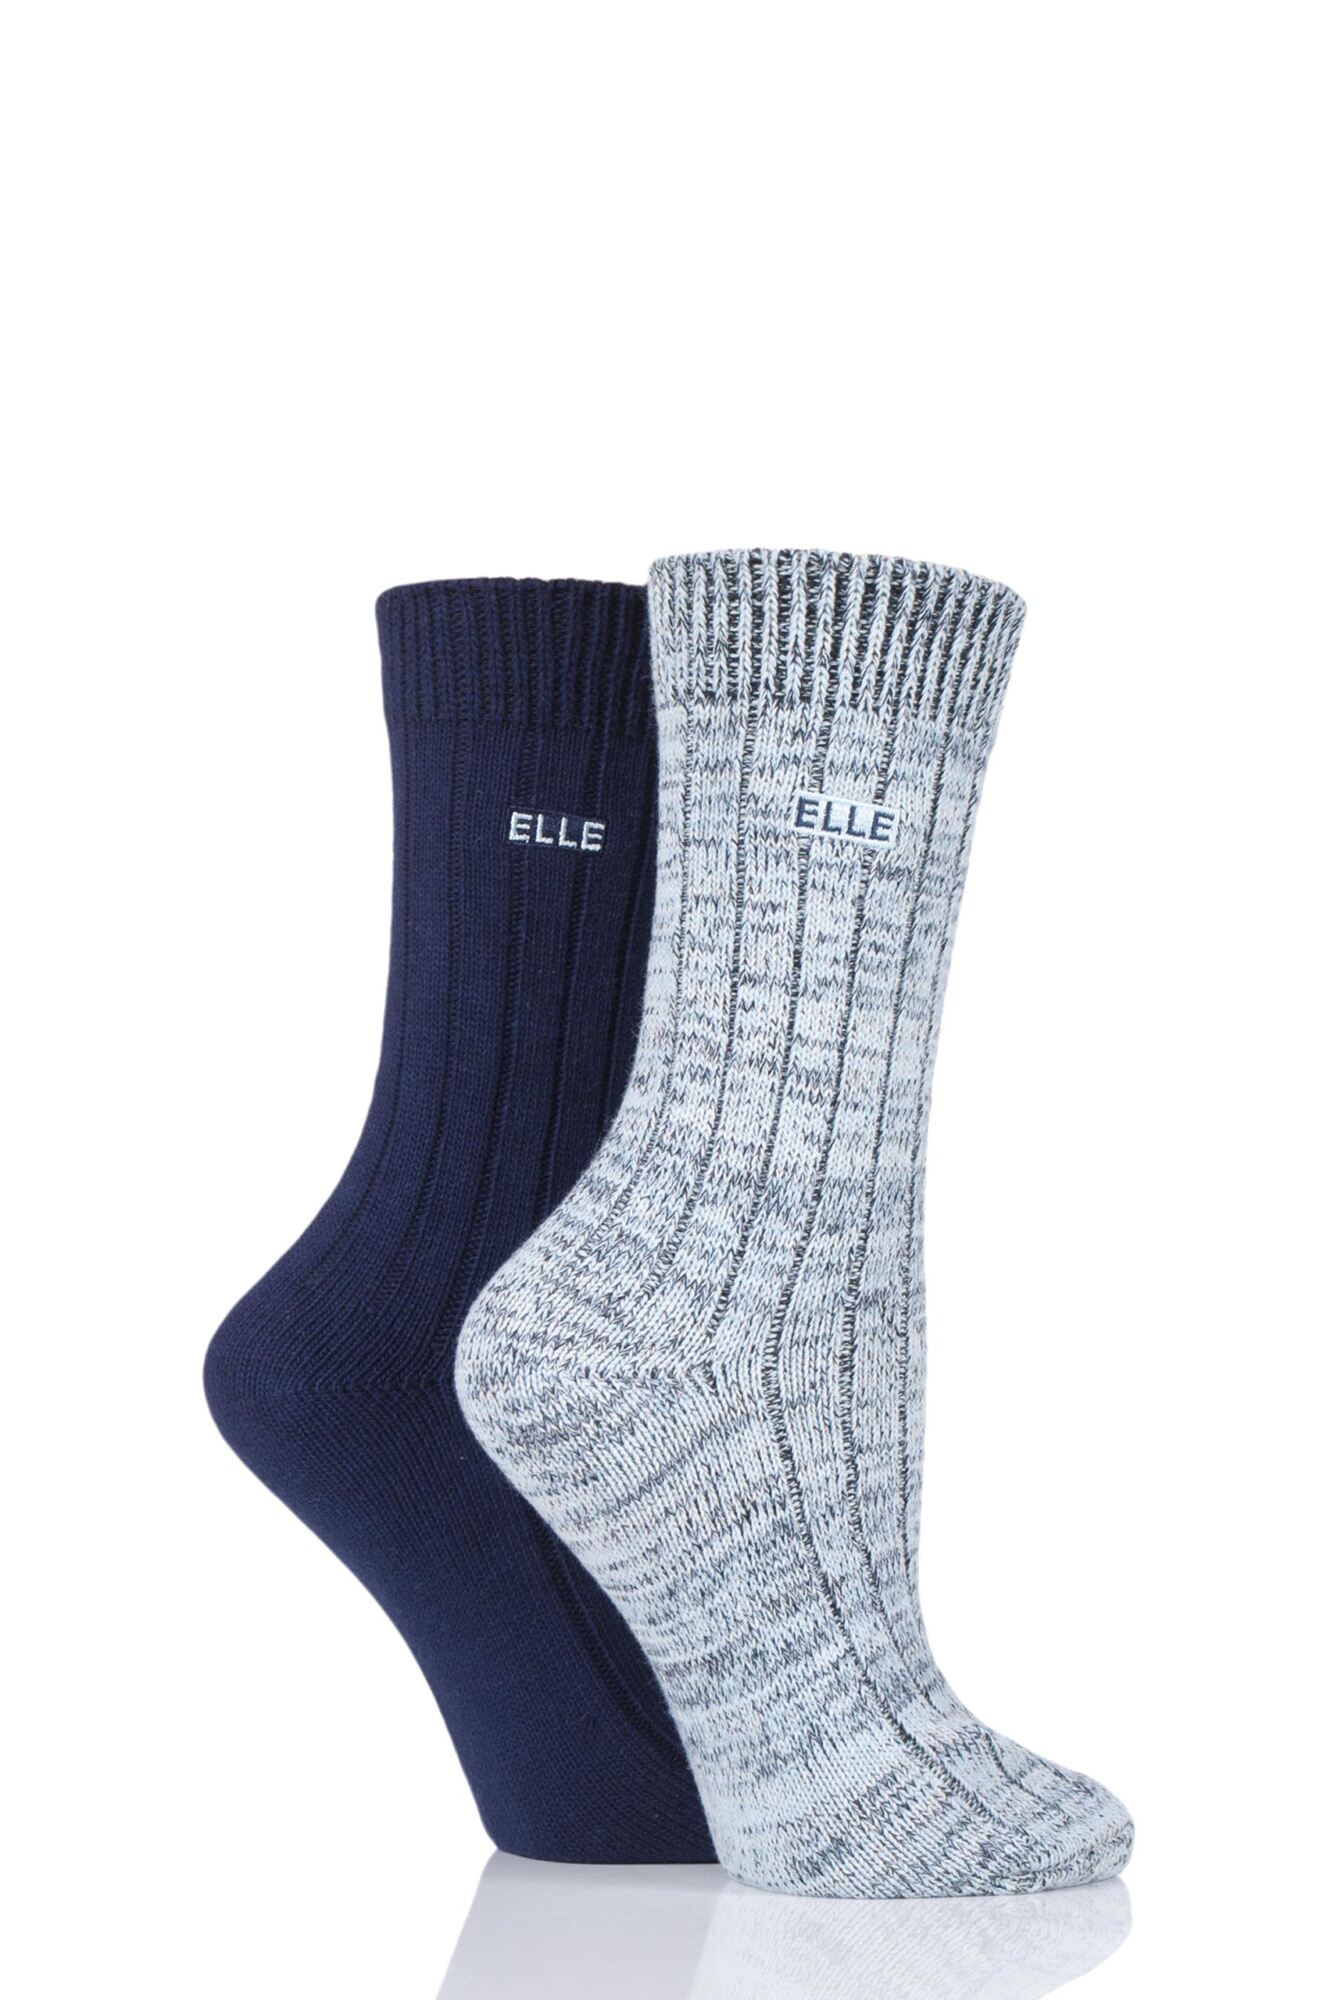 Ladies Elle Chunky Ribbed Boot Socks from SOCKSHOP